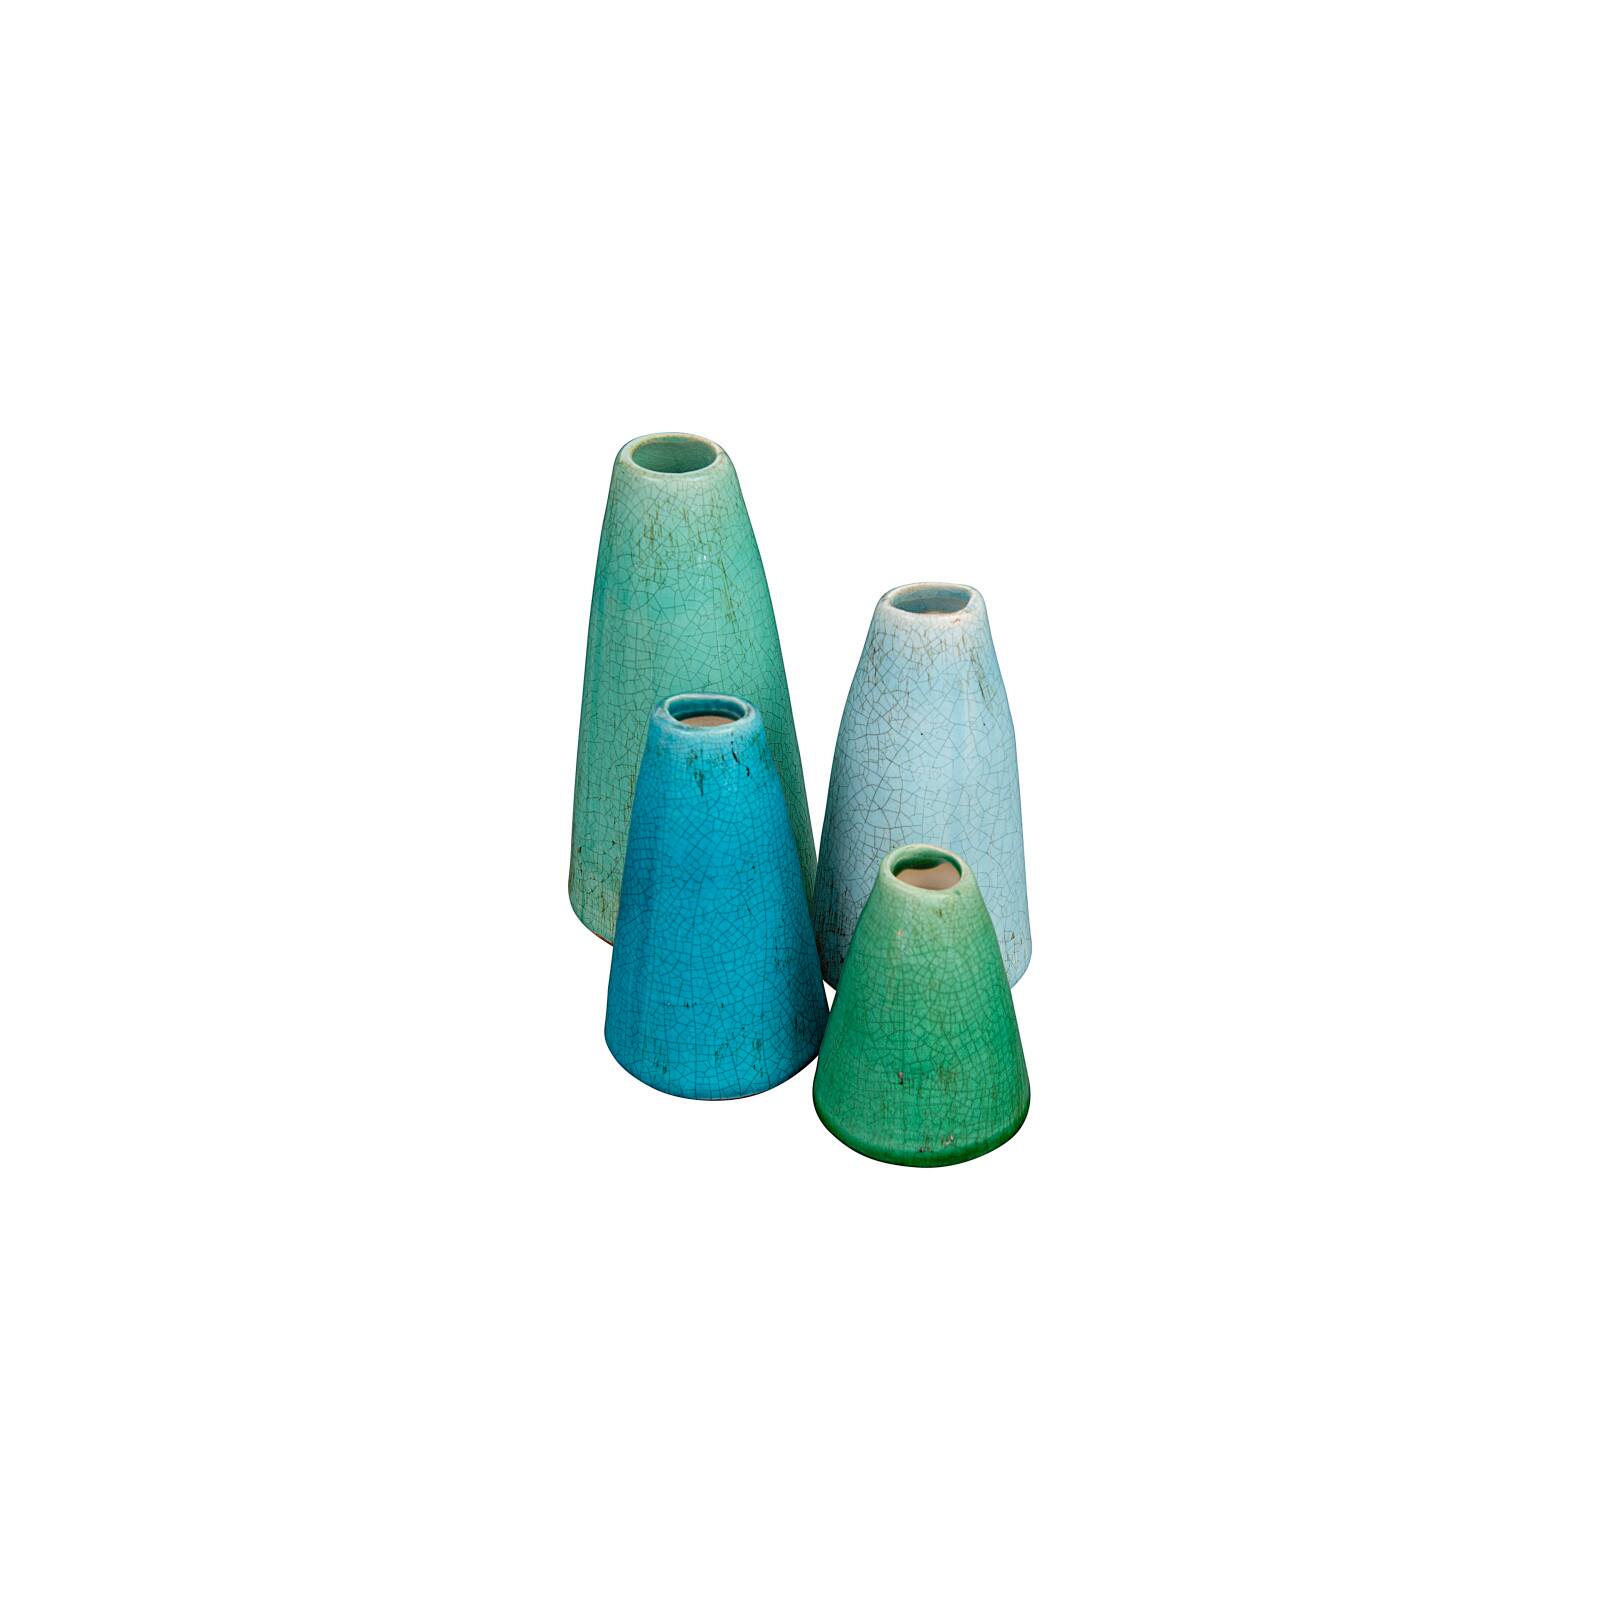 Green &#x26; Blue Terracotta Vase Set